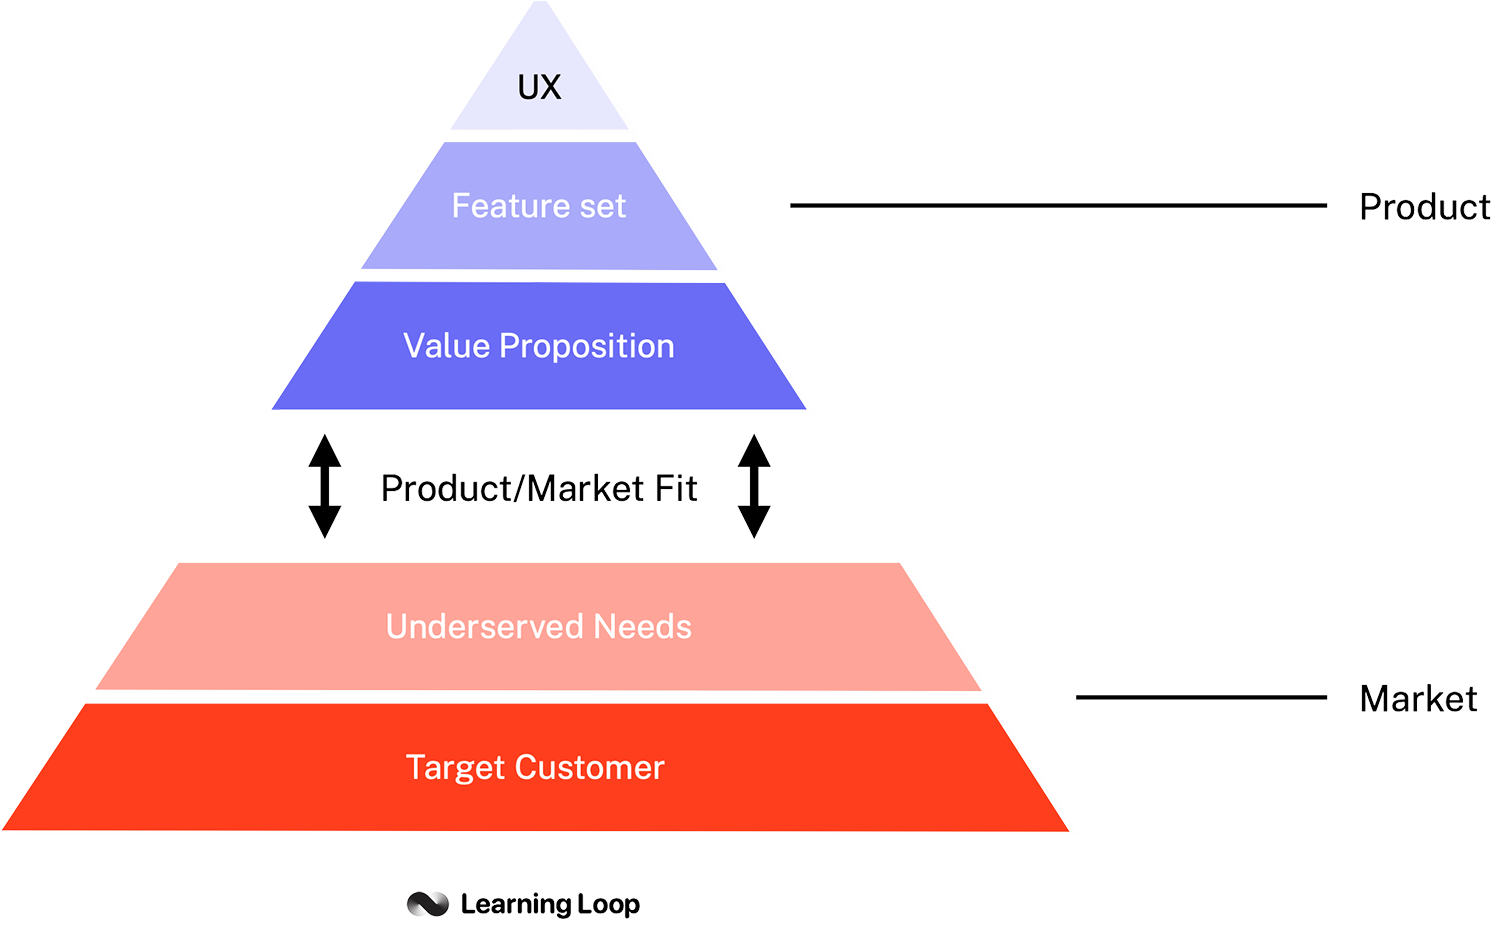 Dan Olsen's Product-Market Fit pyramid.